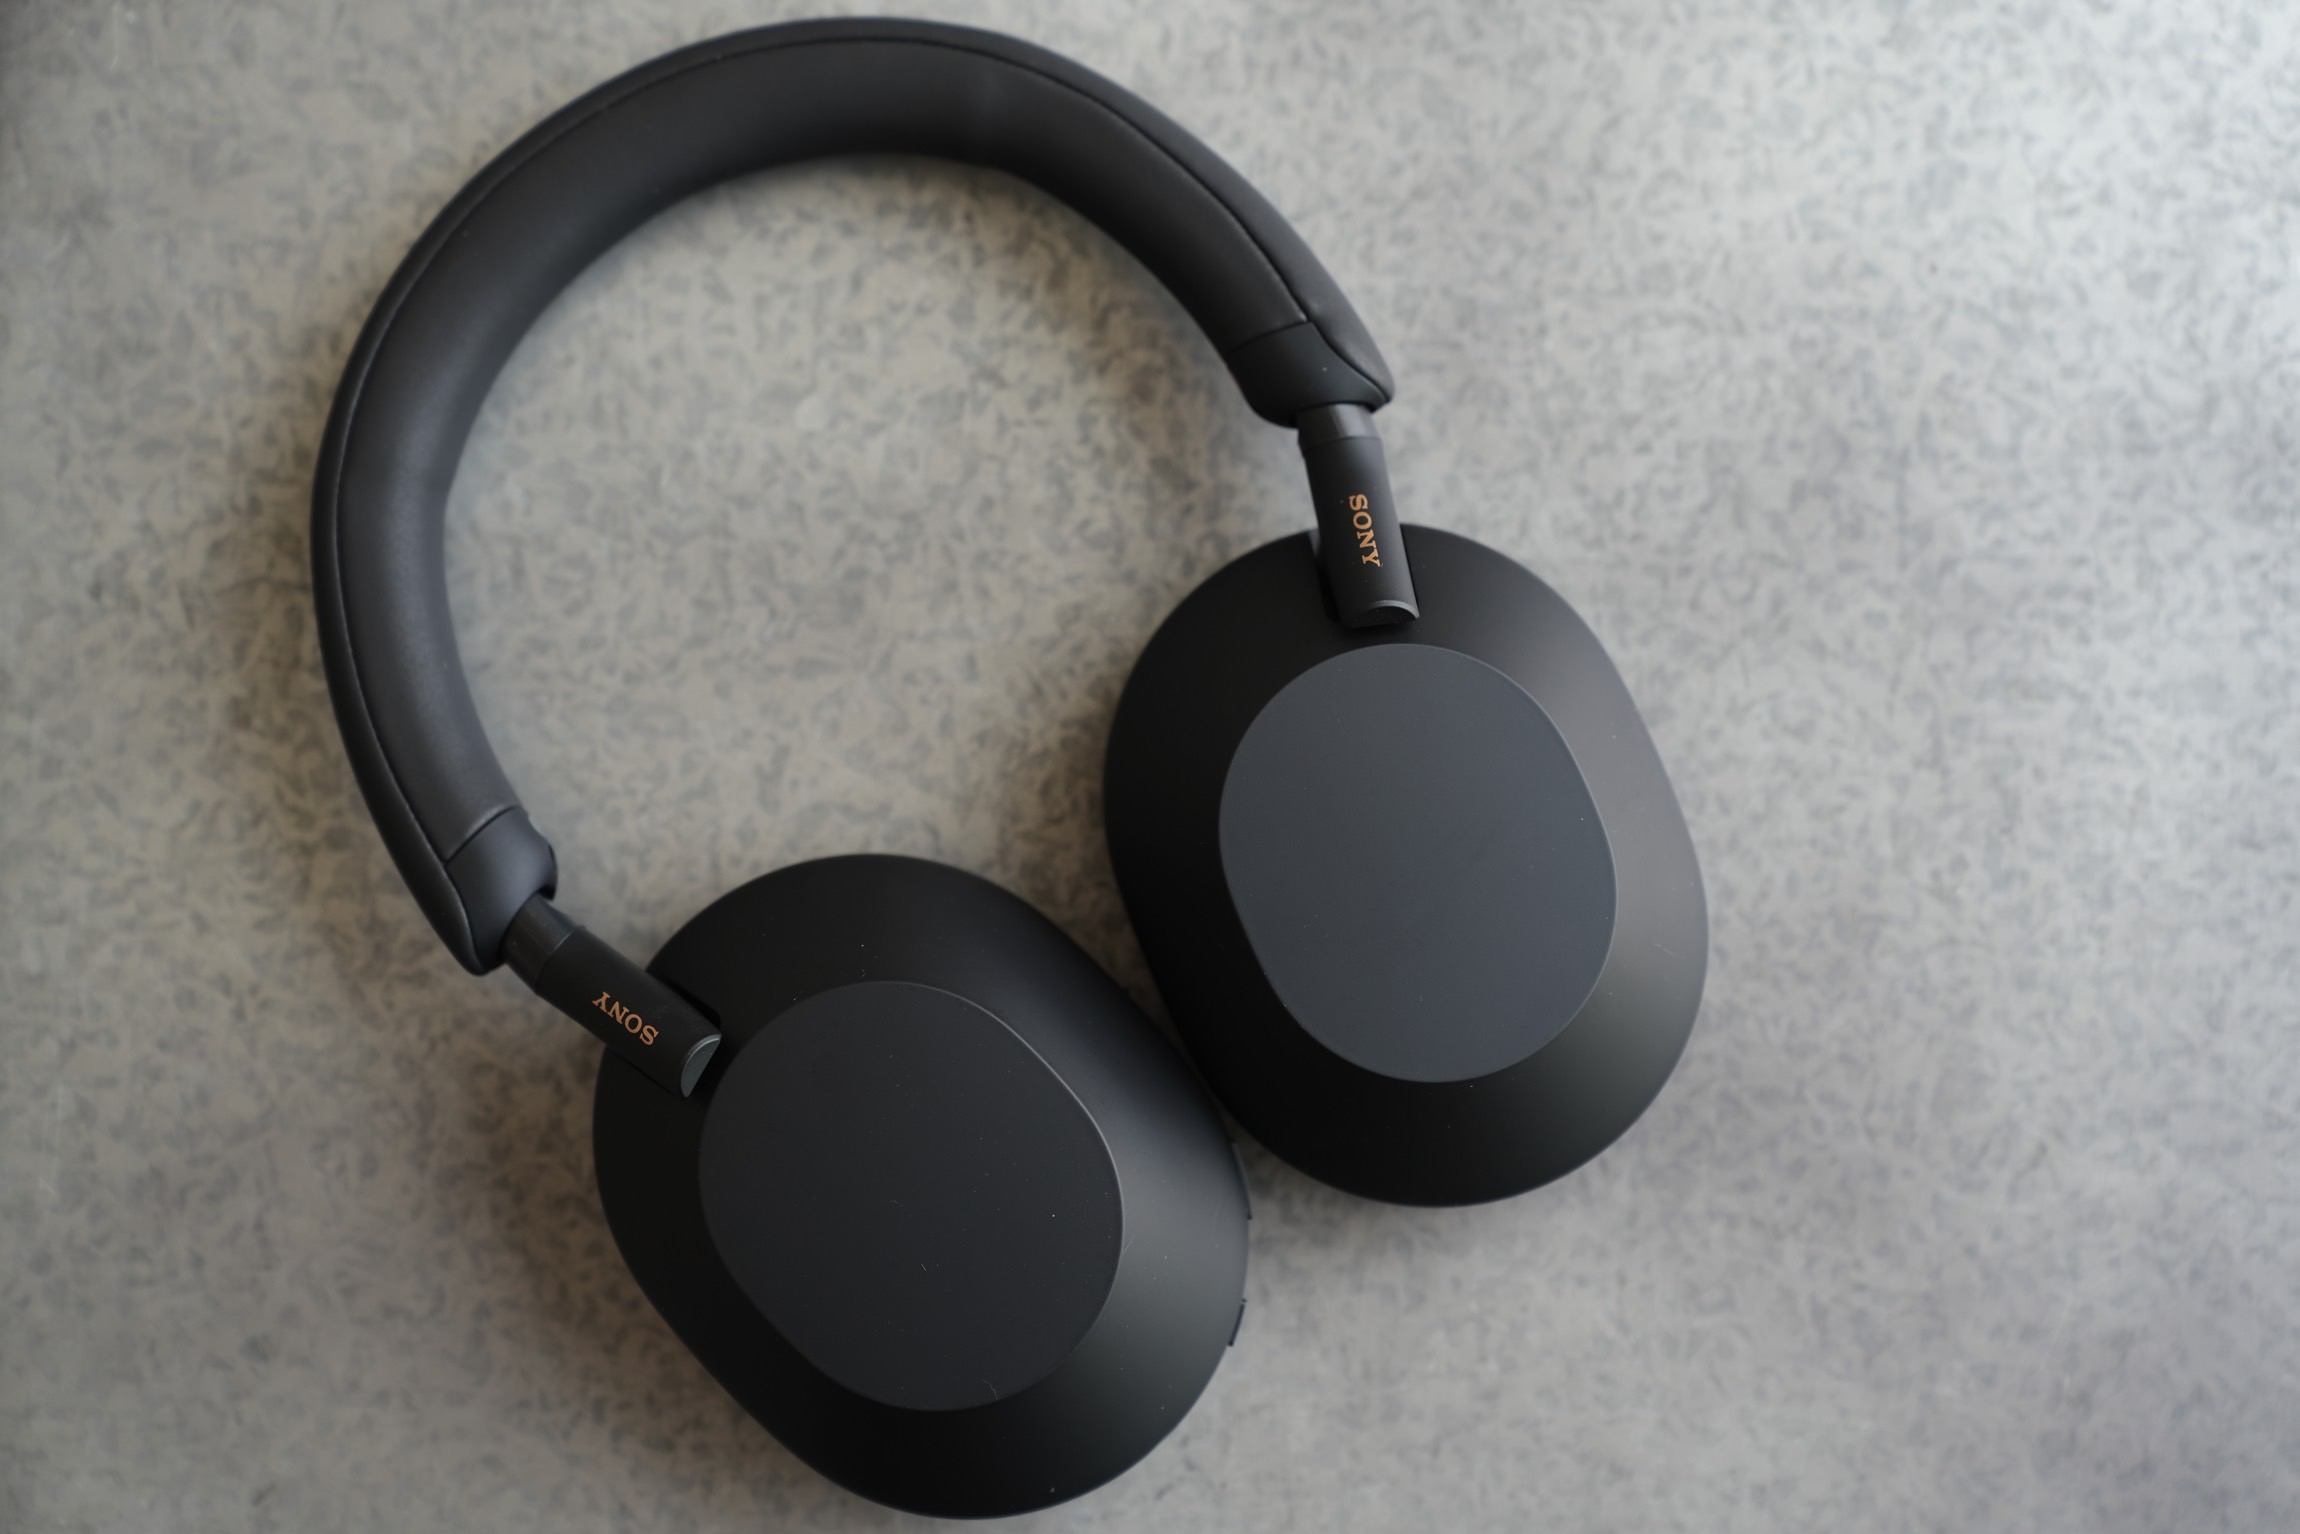 Sony WH-1000XM5 headphones seen in black.